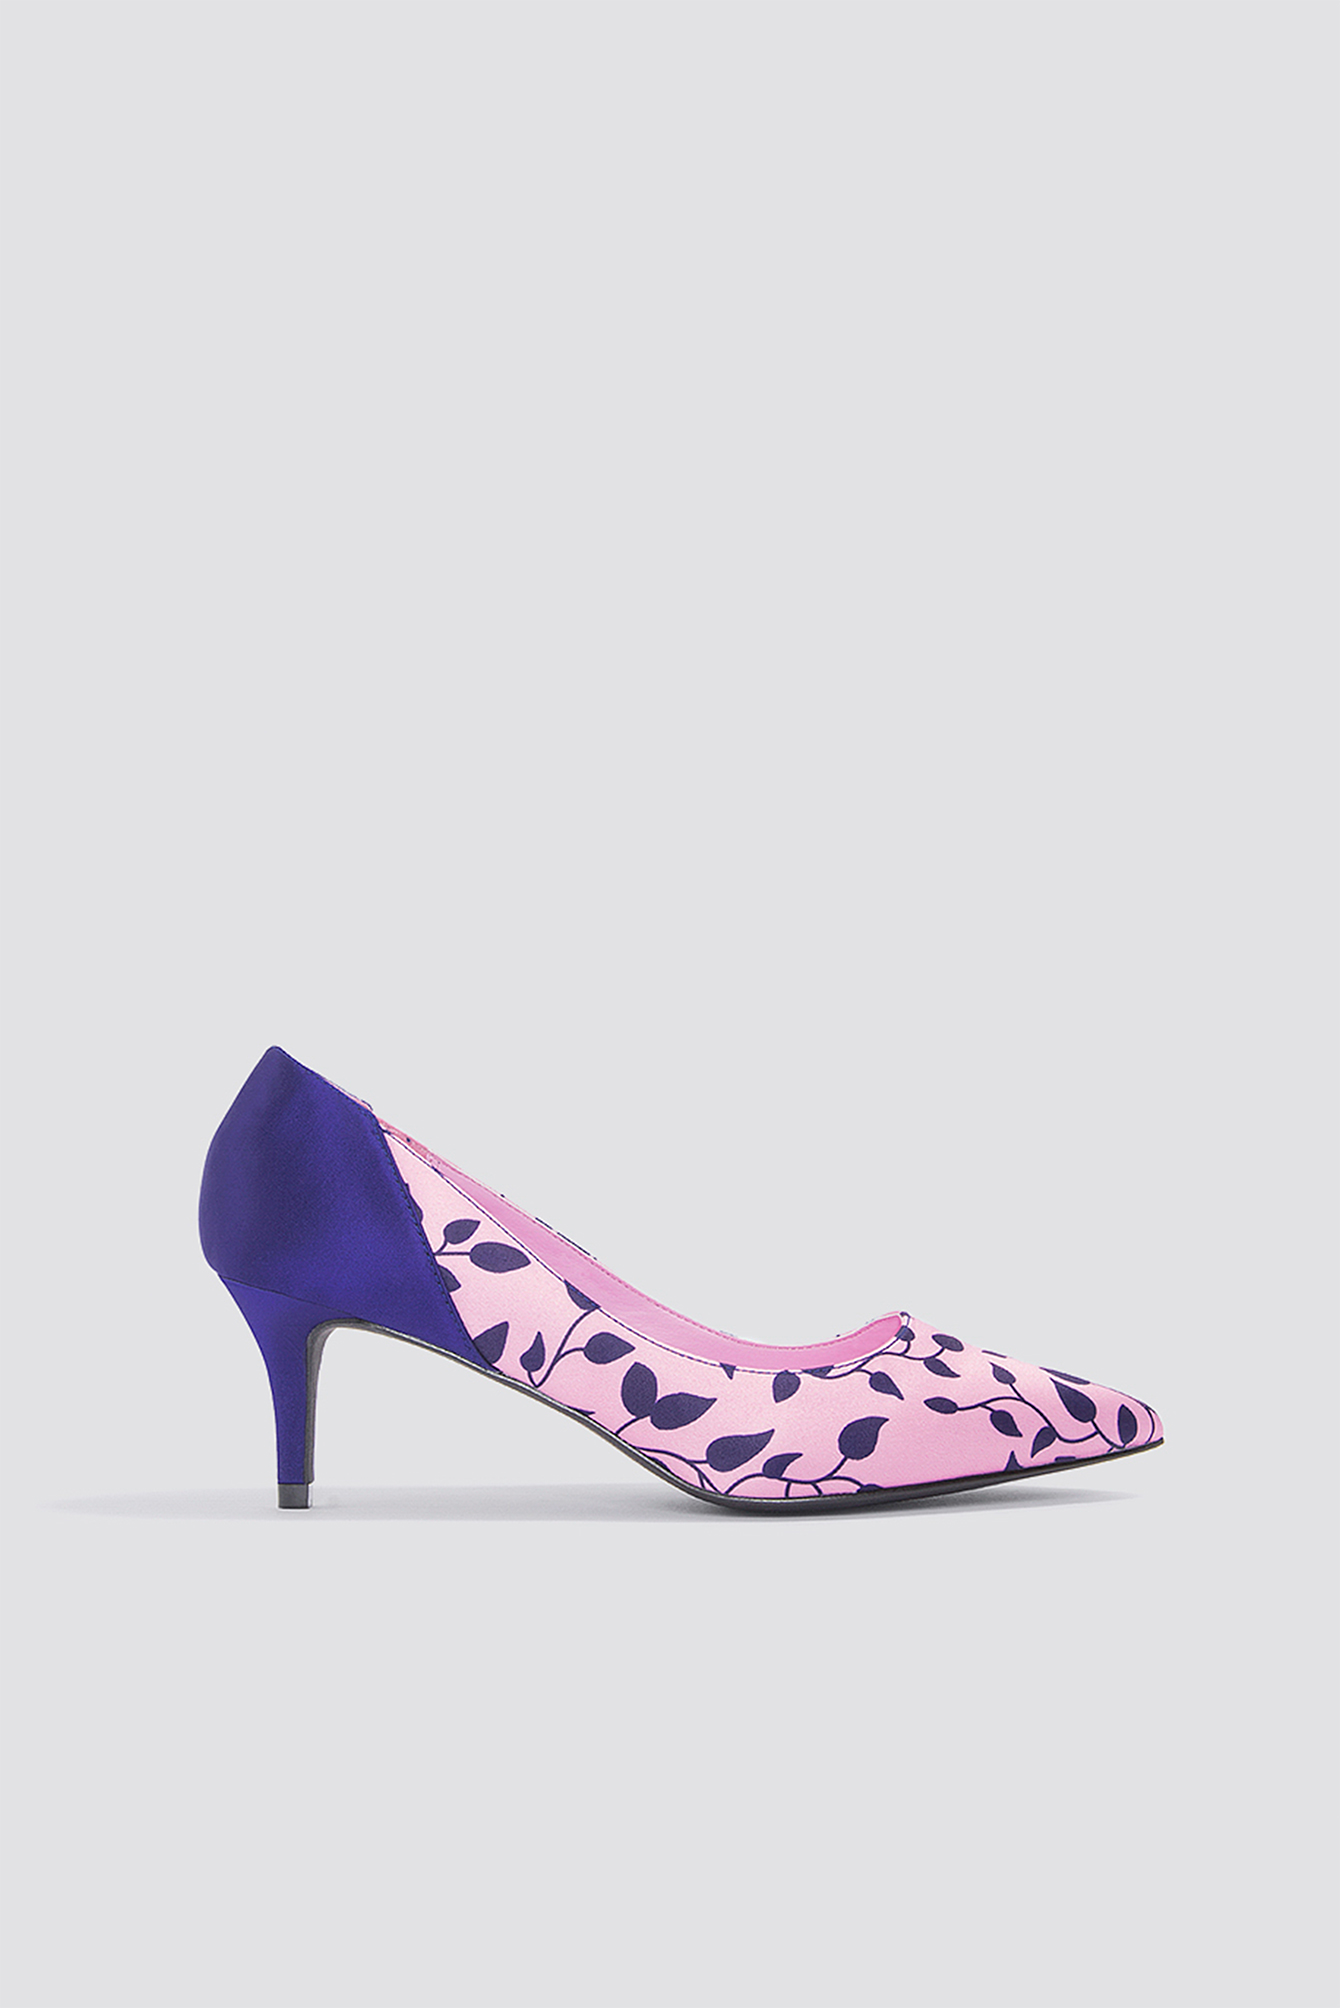 NA-KD Shoes Block Mid Heel Satin Pumps - Pink,Multicolor